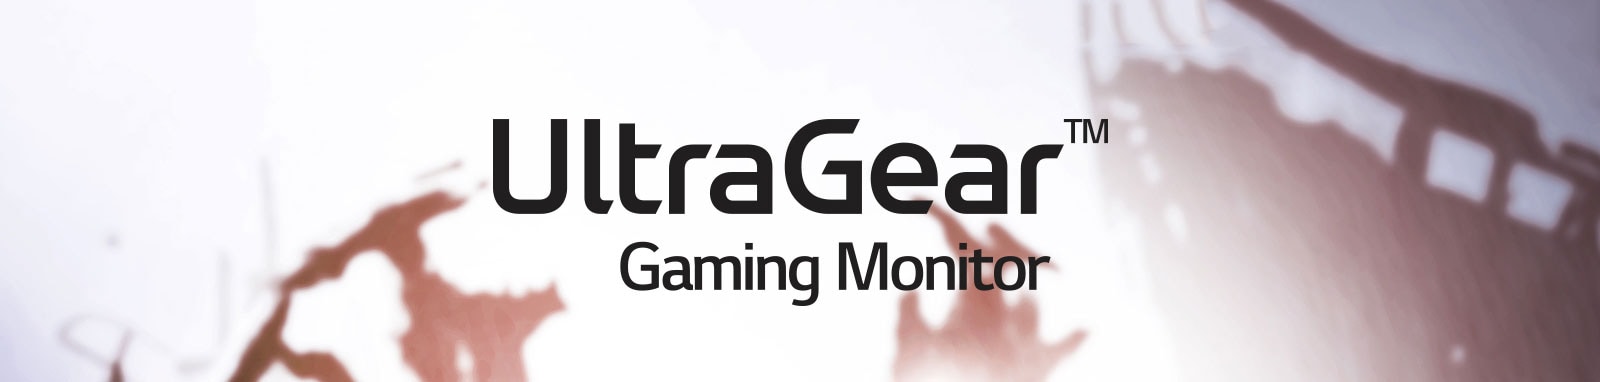 MNT-UltraGear-24GL600F-01-UltraGear-Desktop_t1